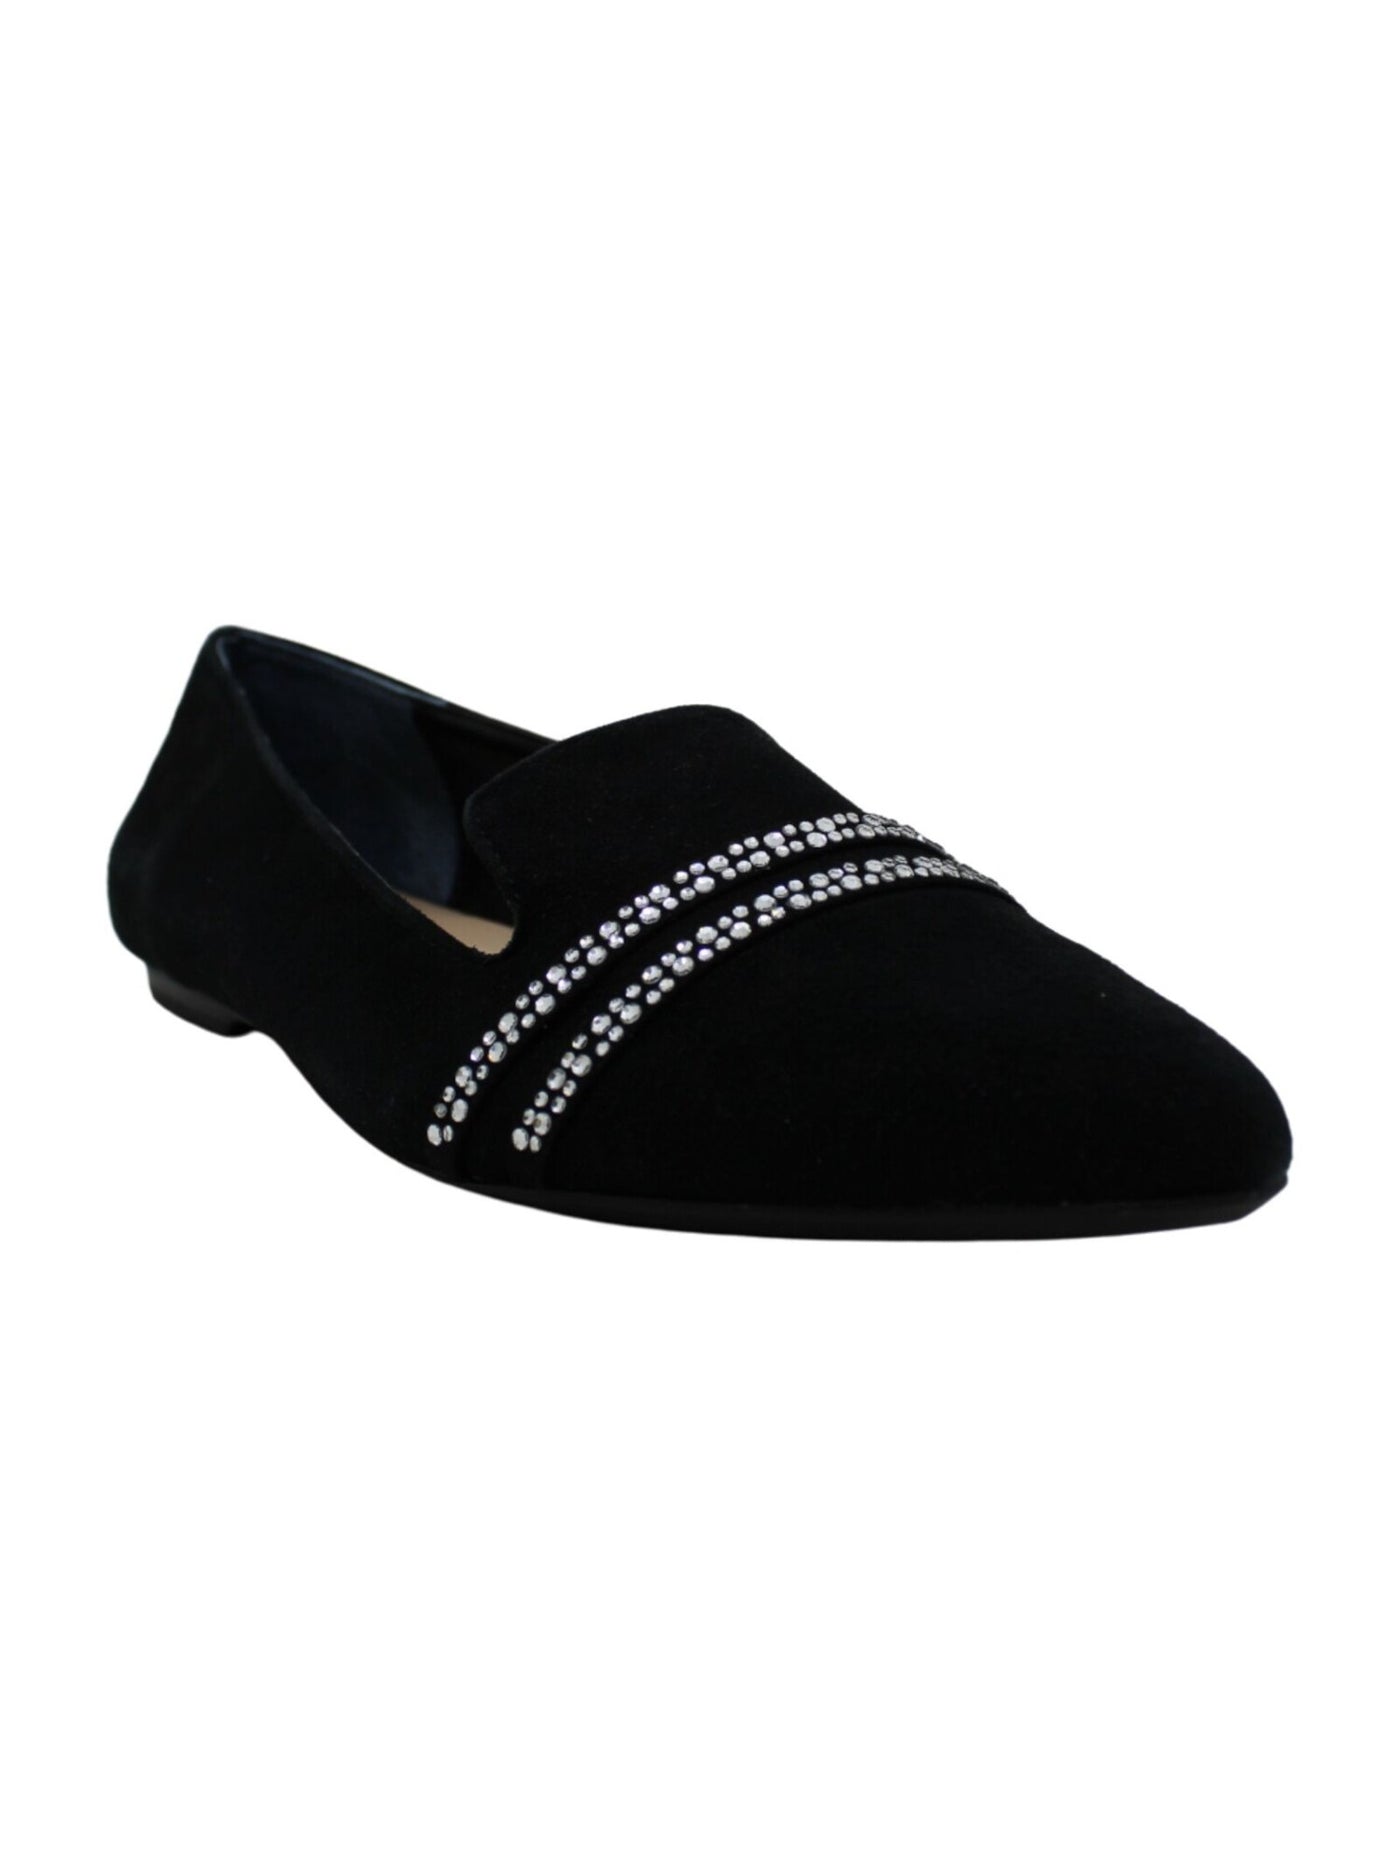 ALFANI Womens Black Step 'N Flex Technology Rhinestone Poee Pointed Toe Slip On Leather Loafers Shoes 6.5 M